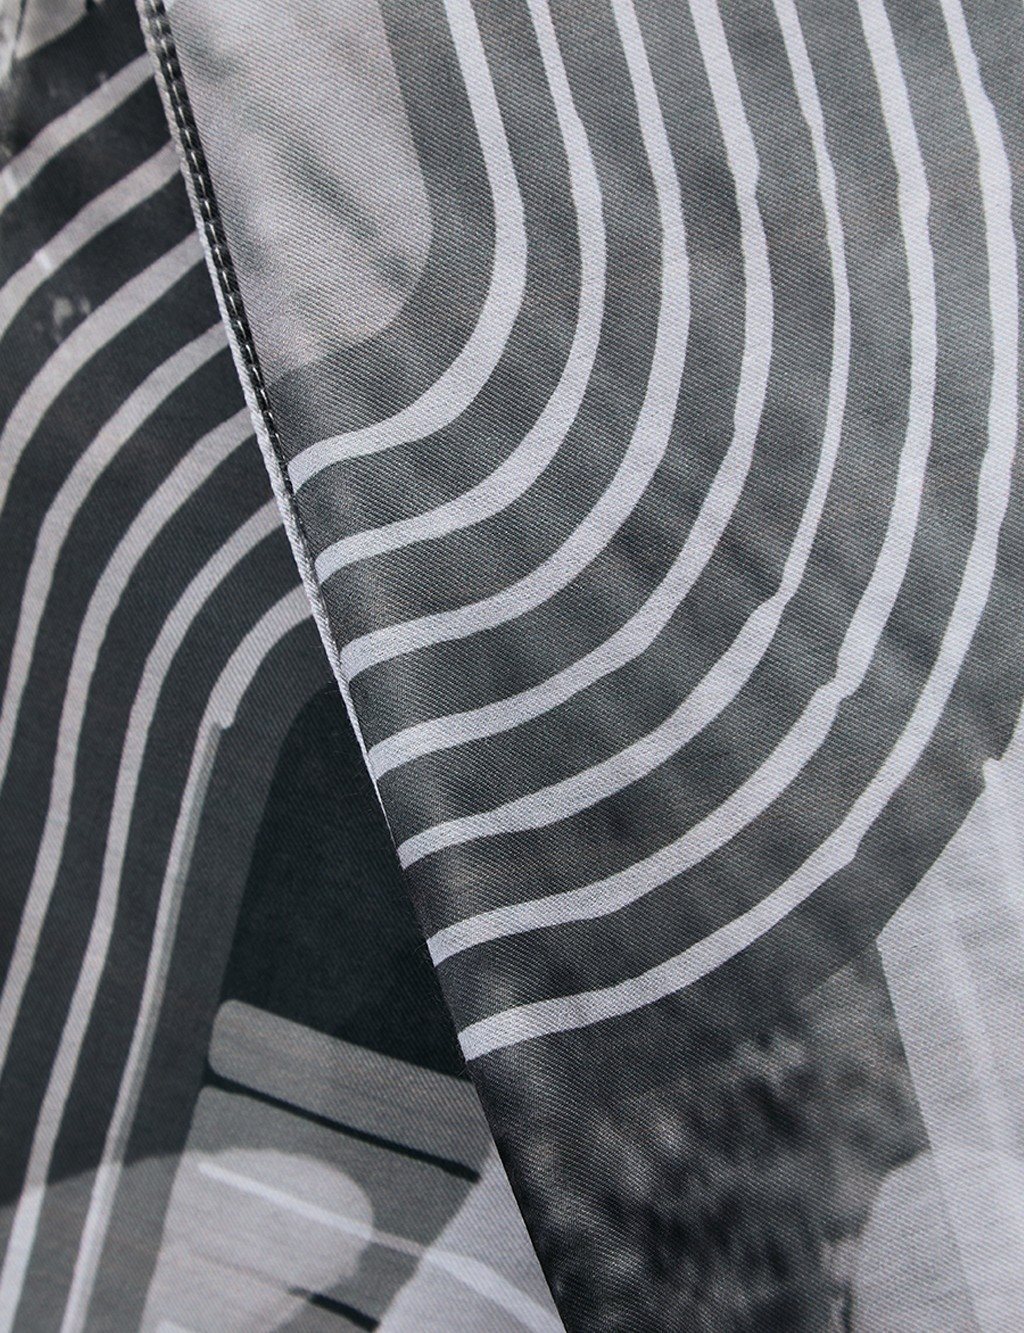 Striped Digital Print Shawl Black